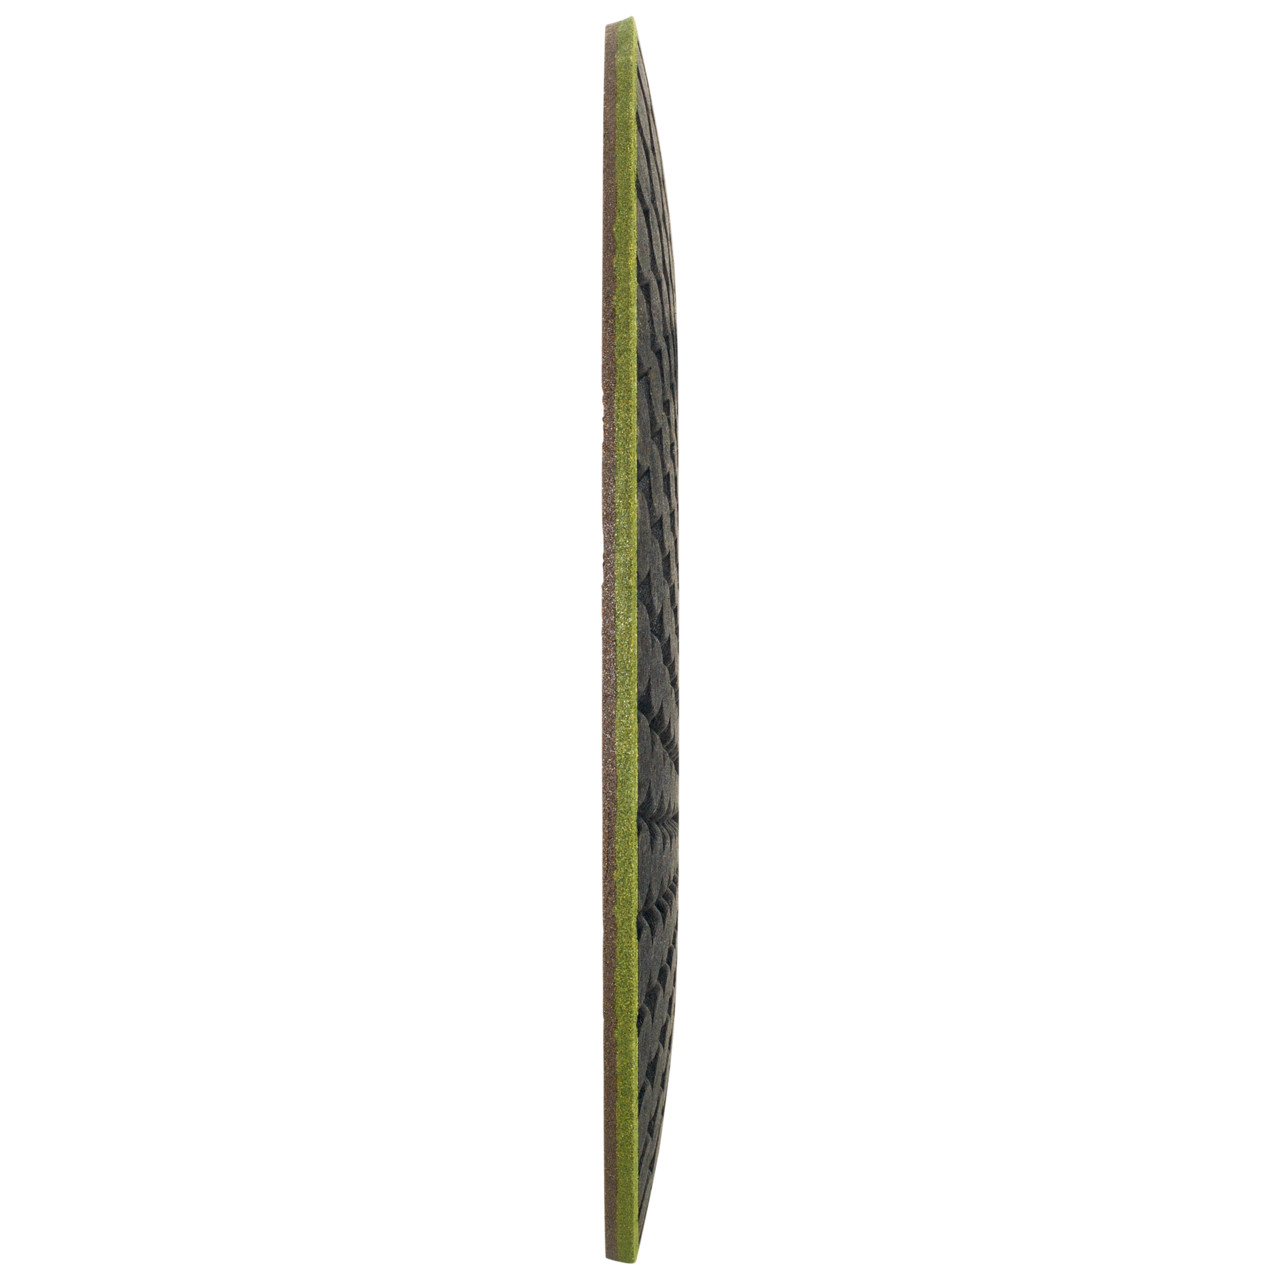 Tyrolit RONDELLER DxH 178x22.23 Per pietra, forma: 29RON (RondellerÂ®), Art. 908224